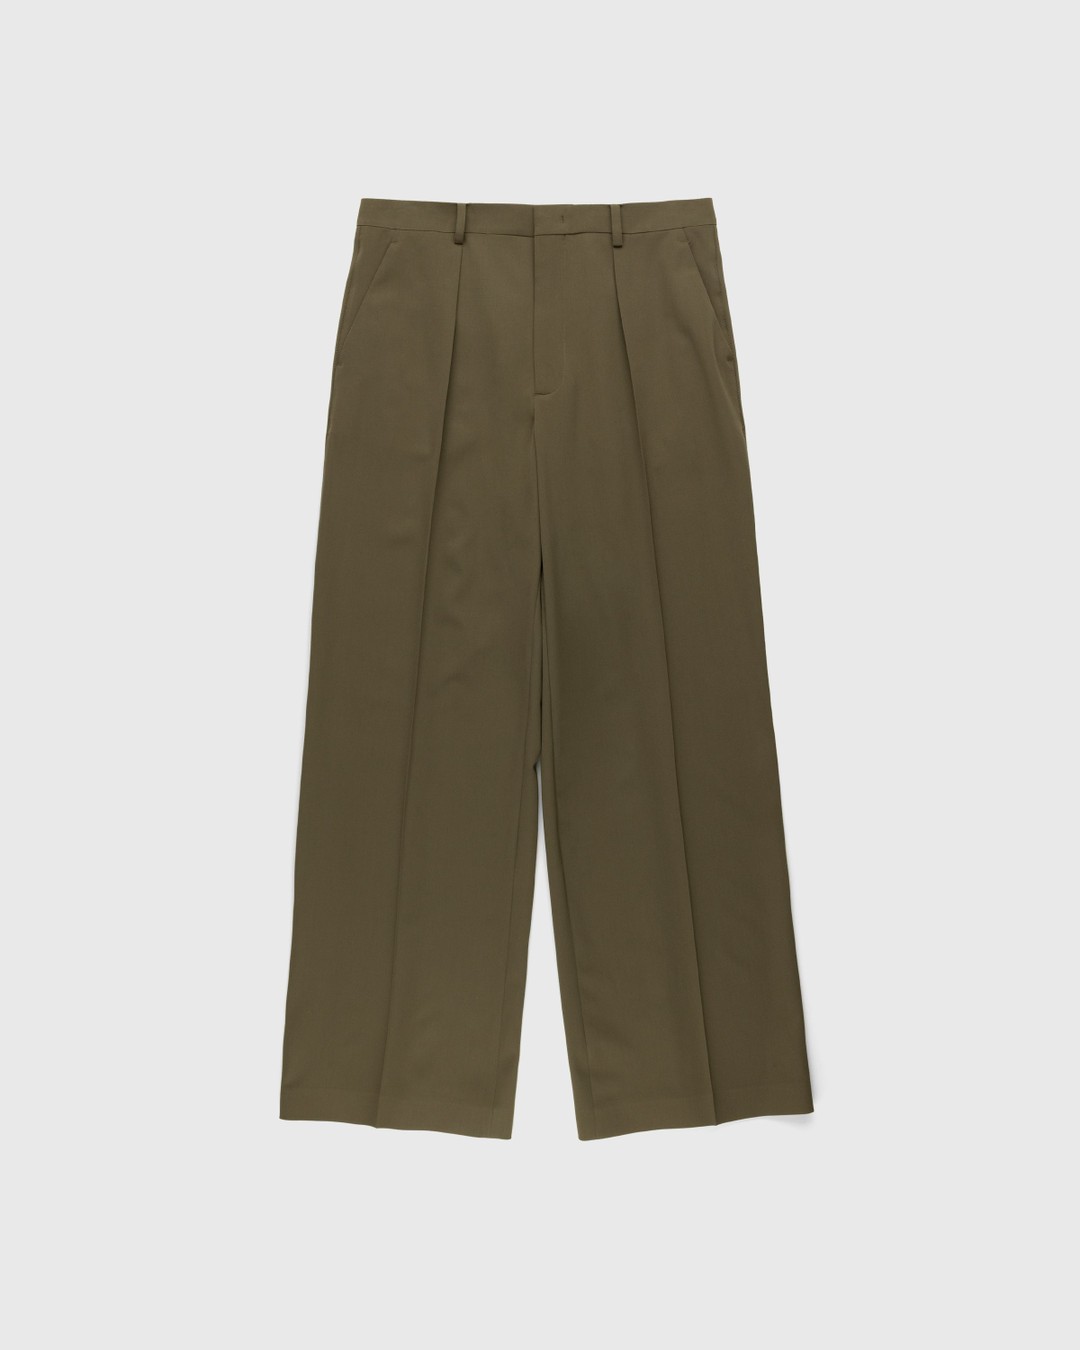 Jean Paul Gaultier – Classic Woven Trouser Khaki - Trousers - Brown - Image 1